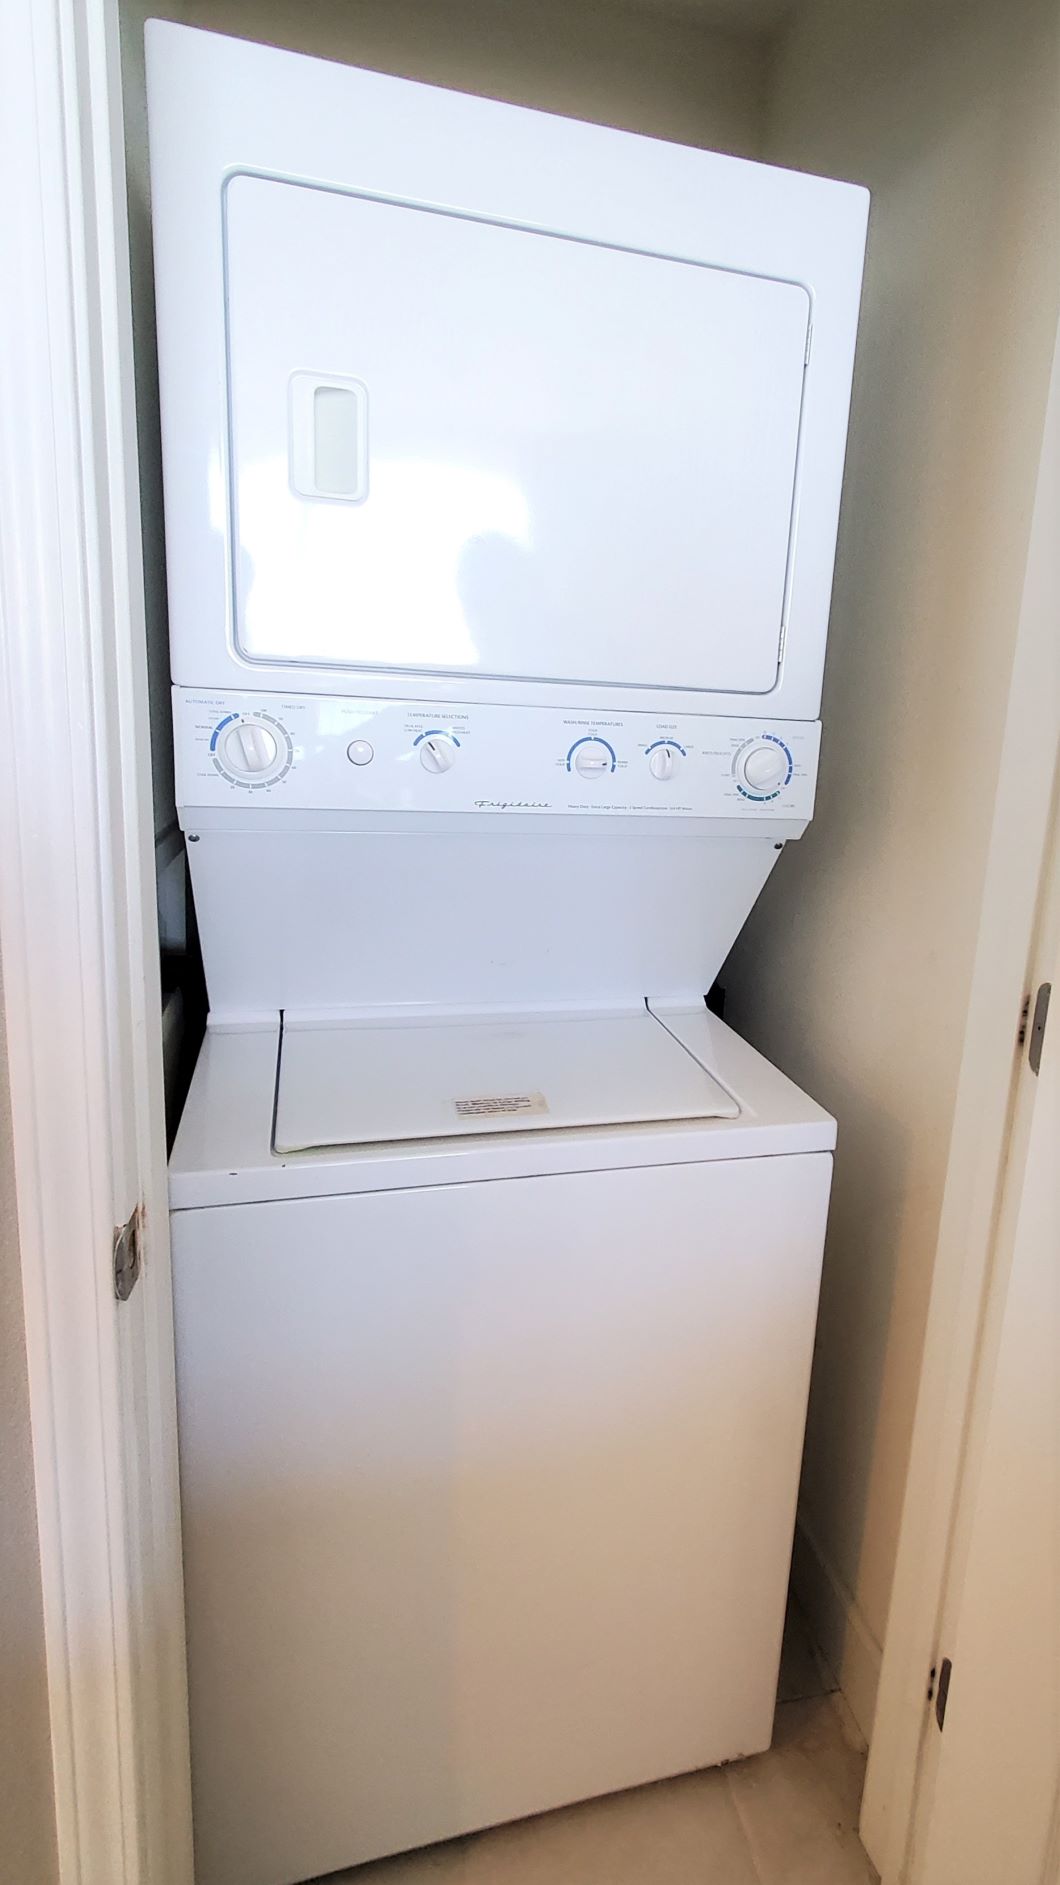 U506 Washer and Dryer